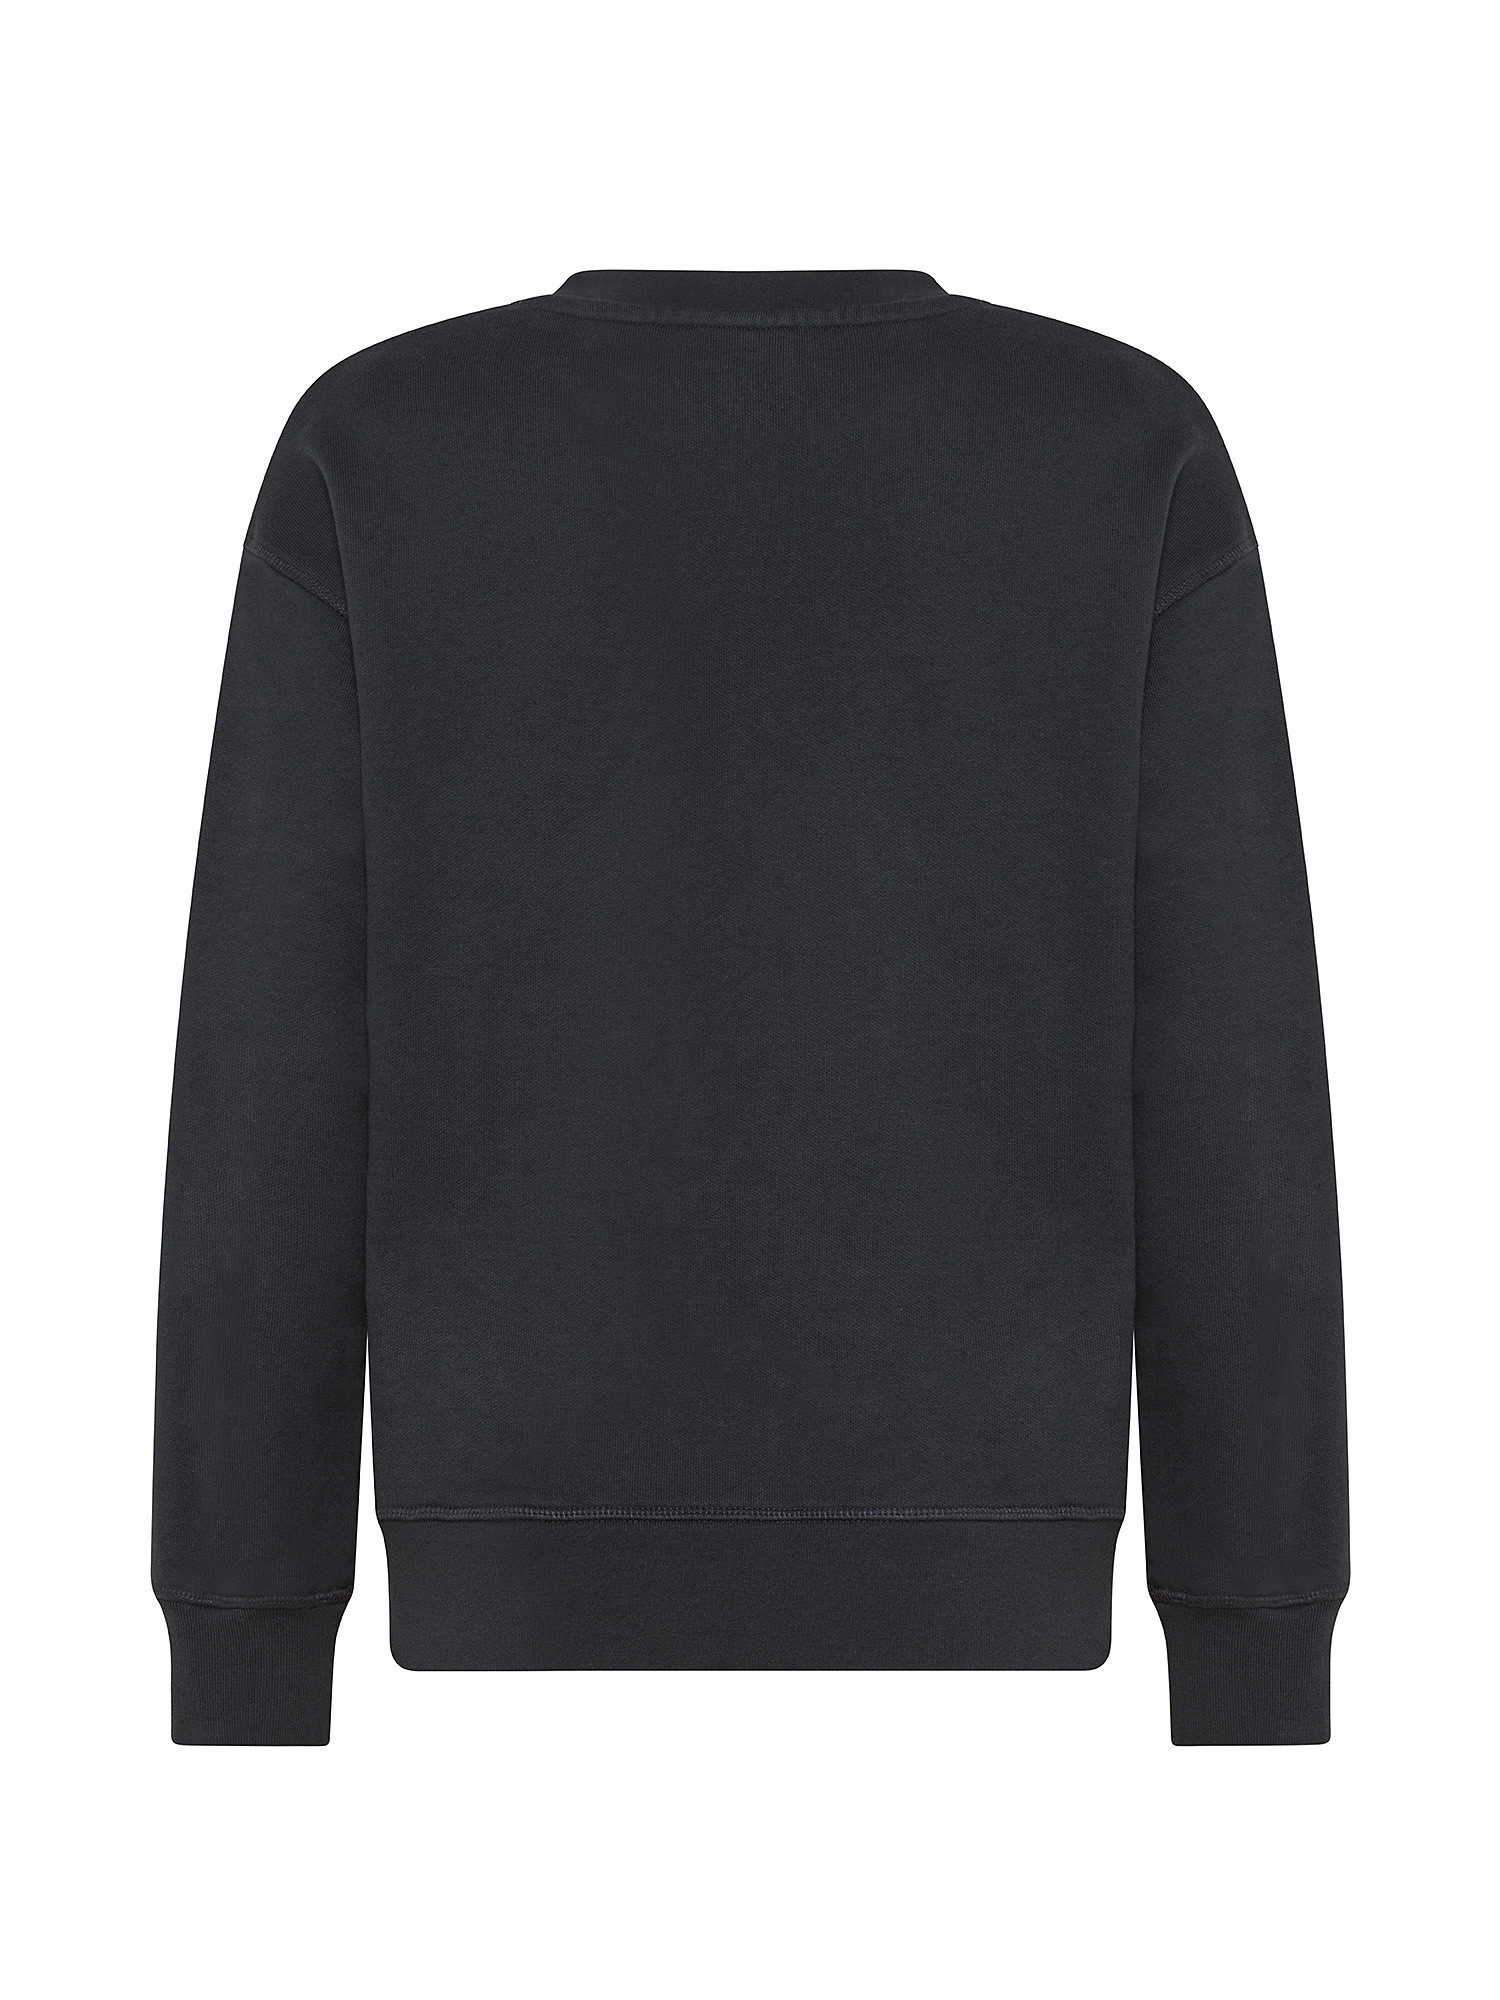 Levi's - Cotton sweatshirt with logo, Black, large image number 1